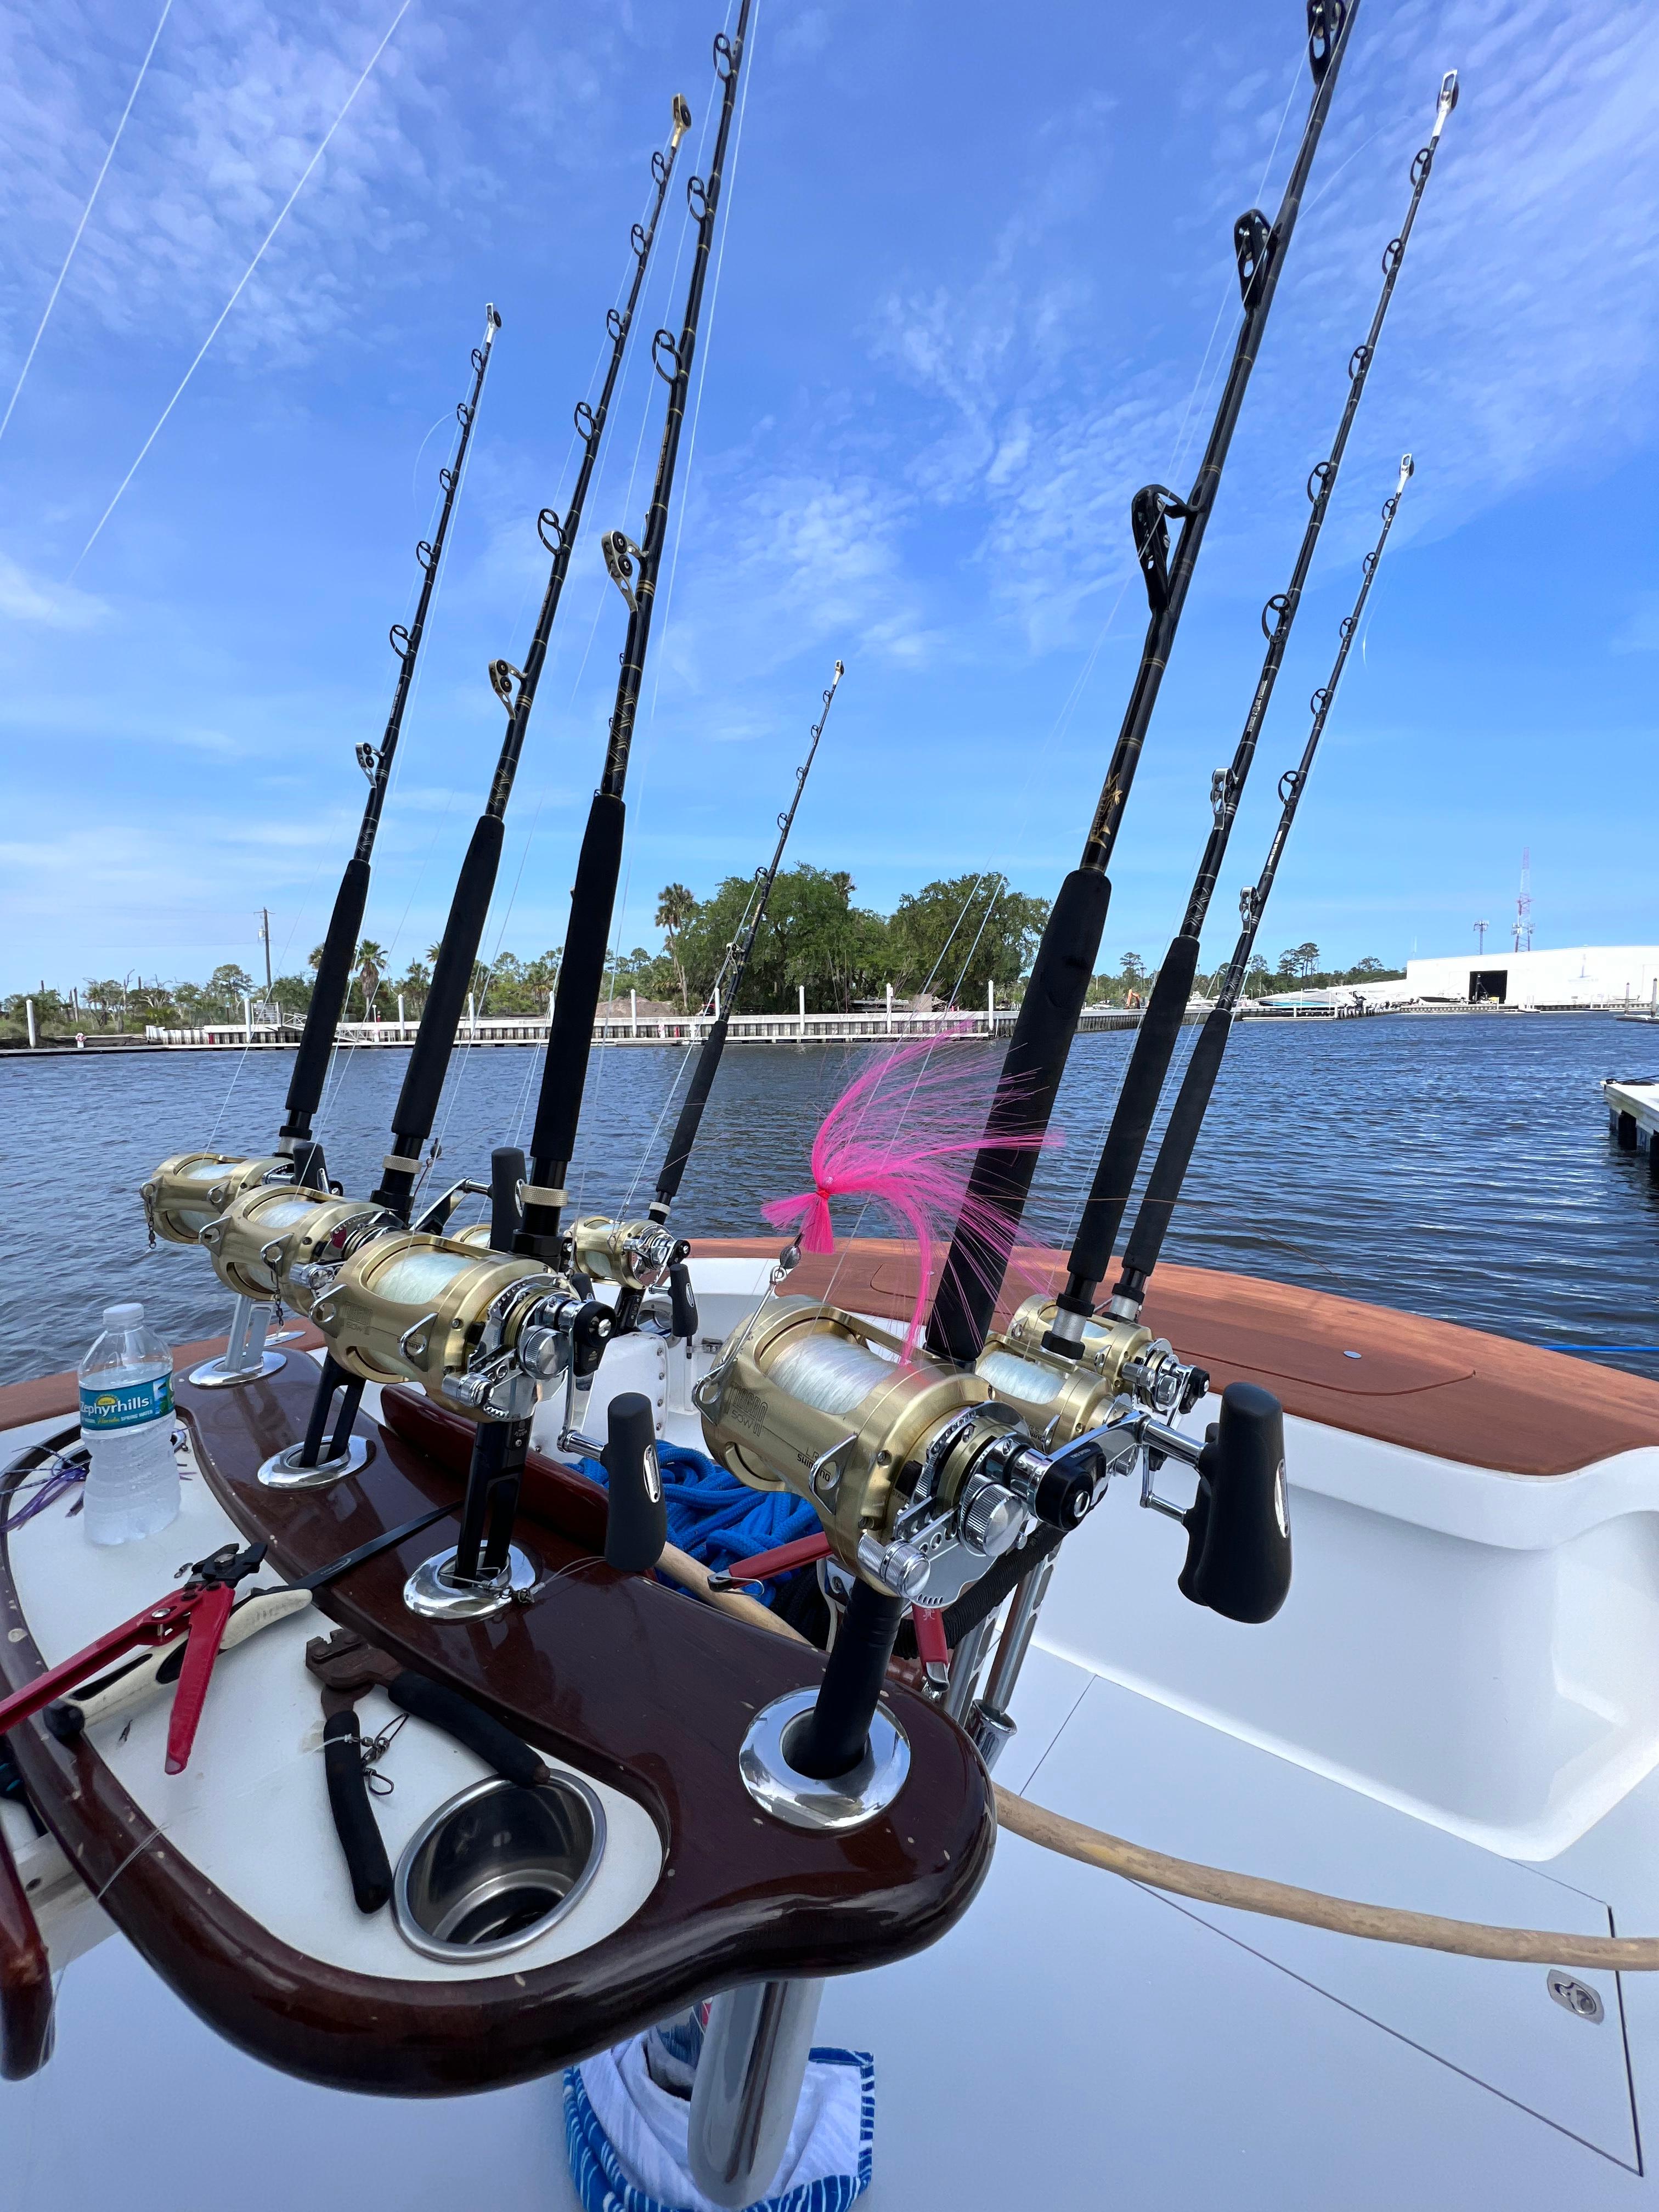 Specializing in bending rods! - Rowe Boat Sportfishing